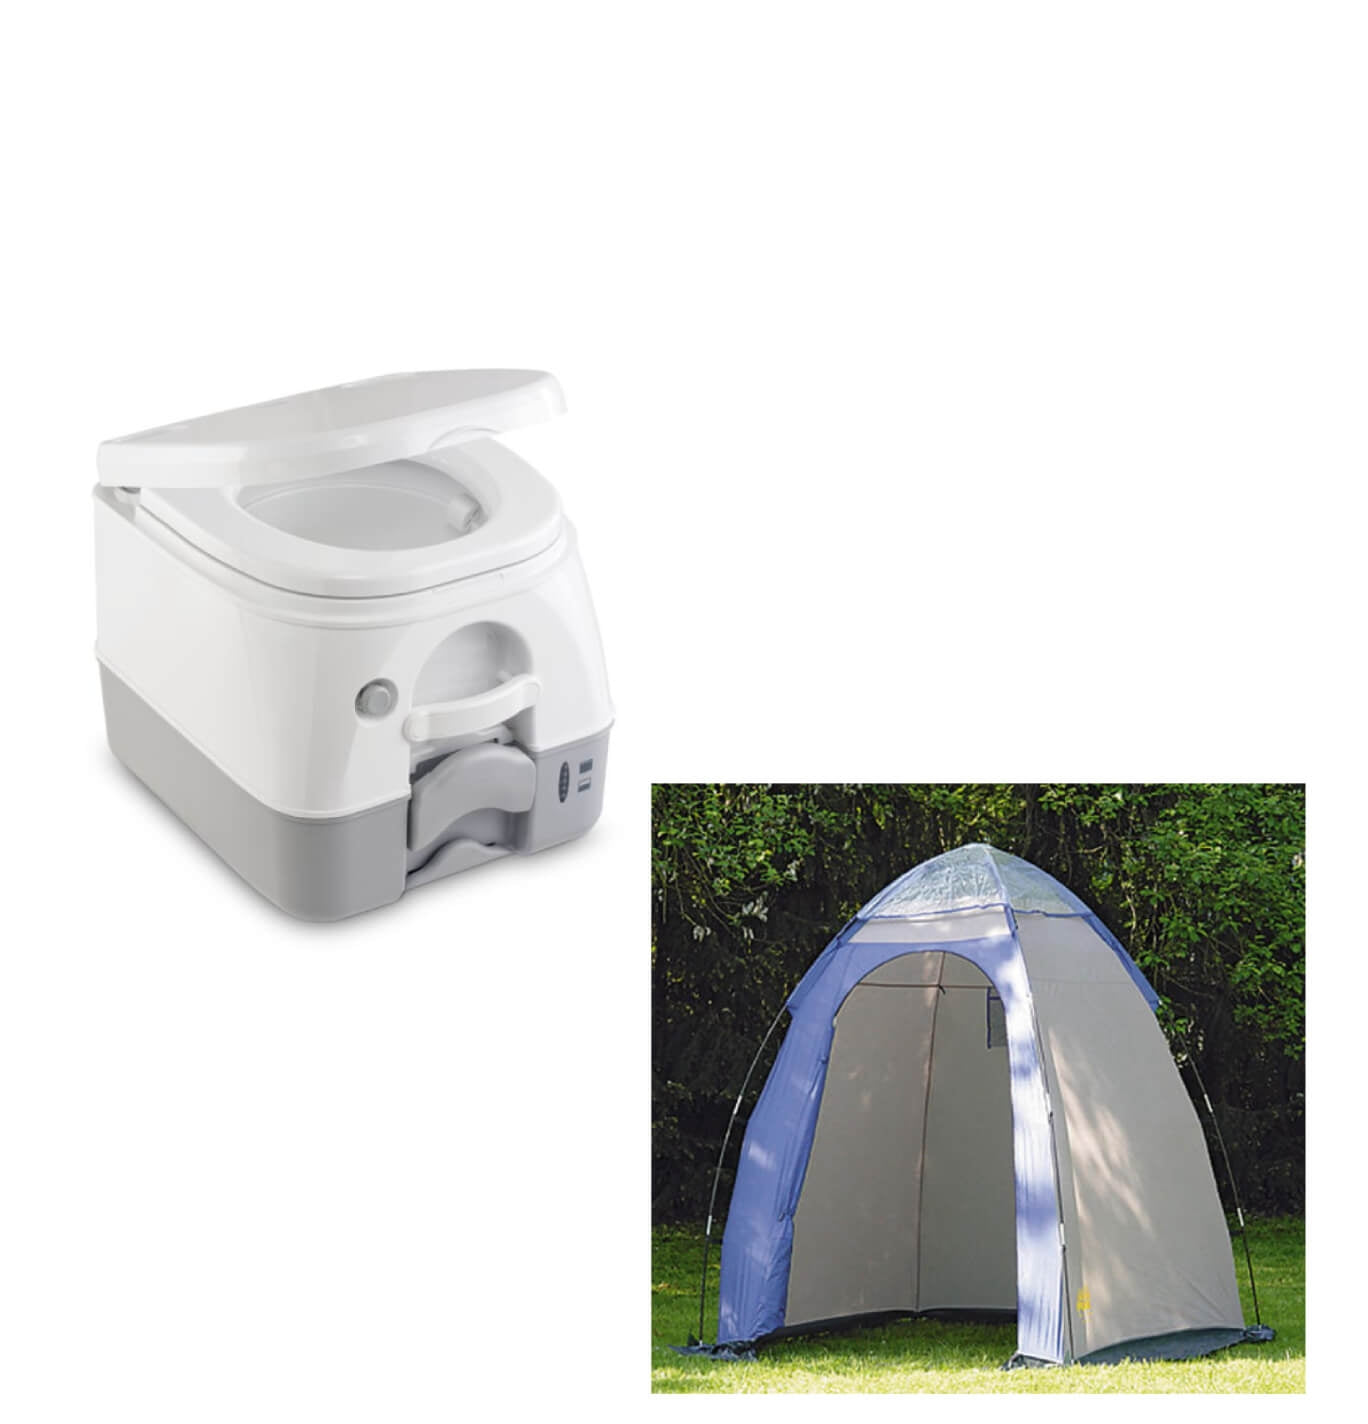 Dometic 972G Portable Toilet & Reimo Malta Storage Tent Bundle Image